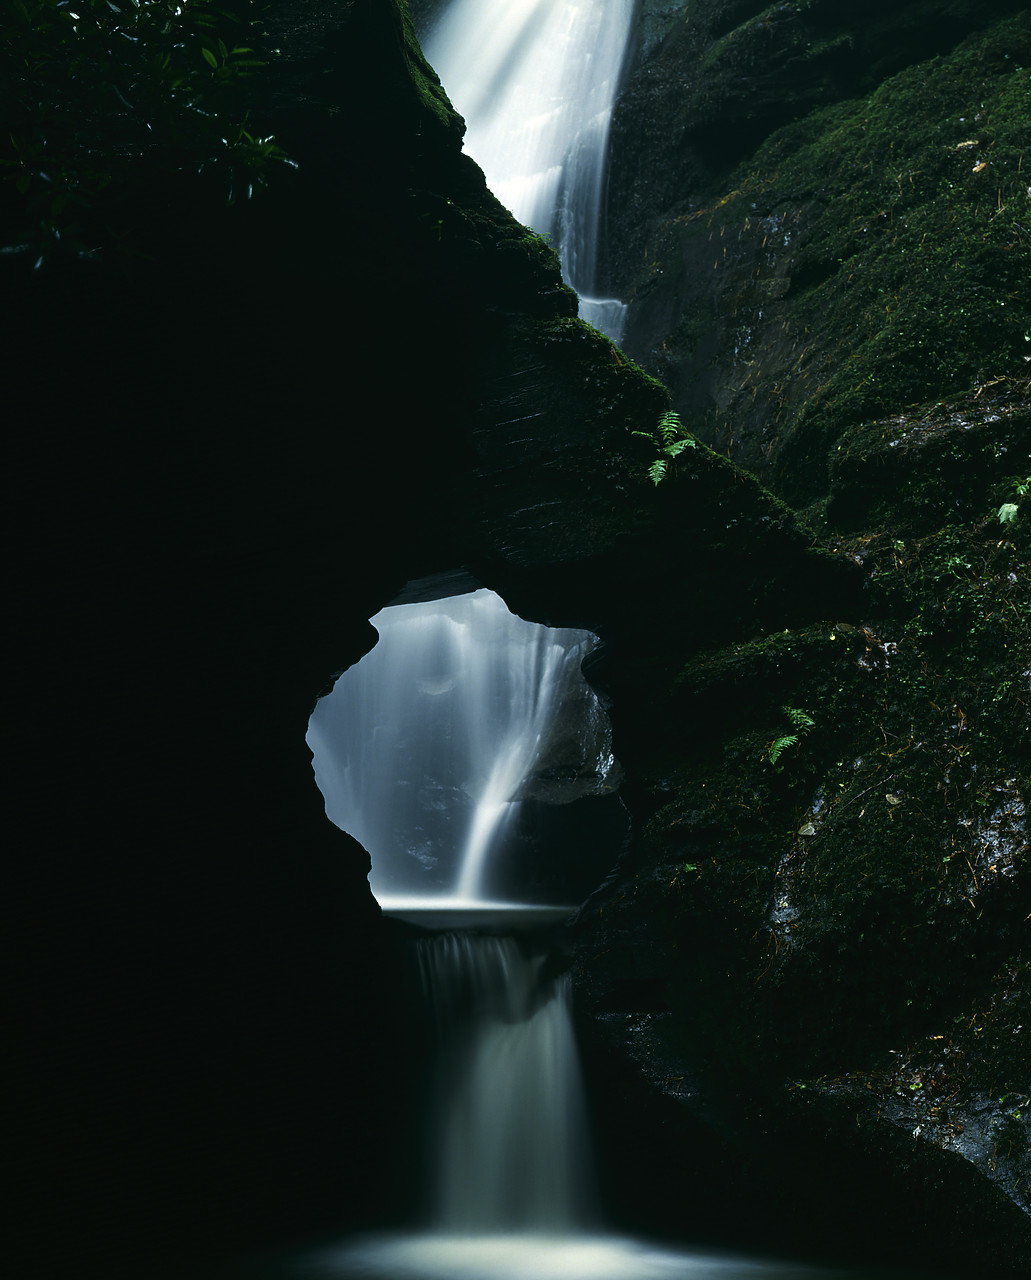 #87881-1 - St. Nectan's Glen Waterfall, near Tintagel, Cornwall, England